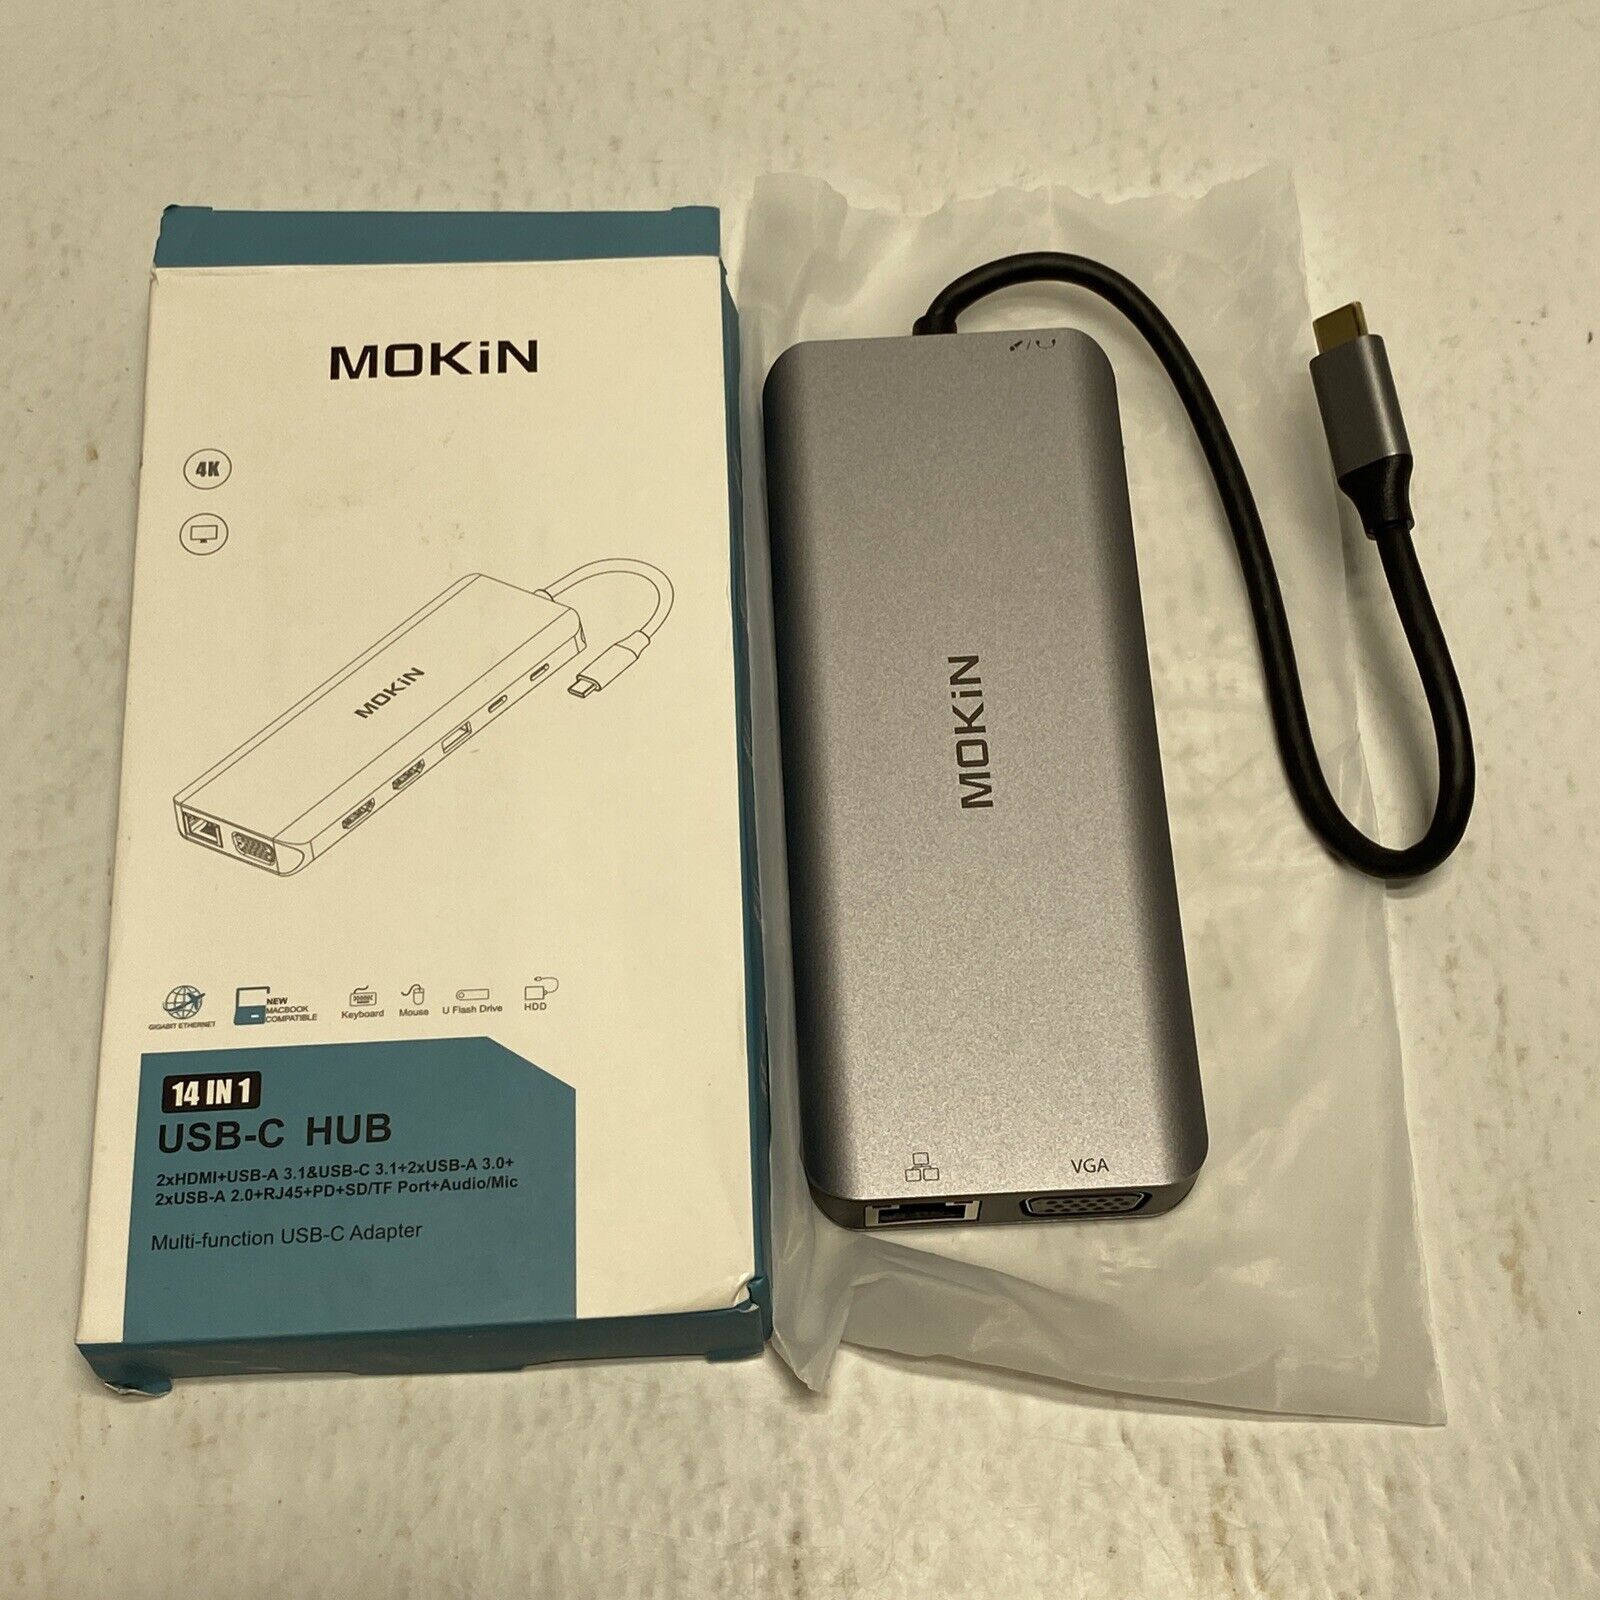 14 in 1 Mokin Multi-function USB-C HUB Adaptor, MOUC0218